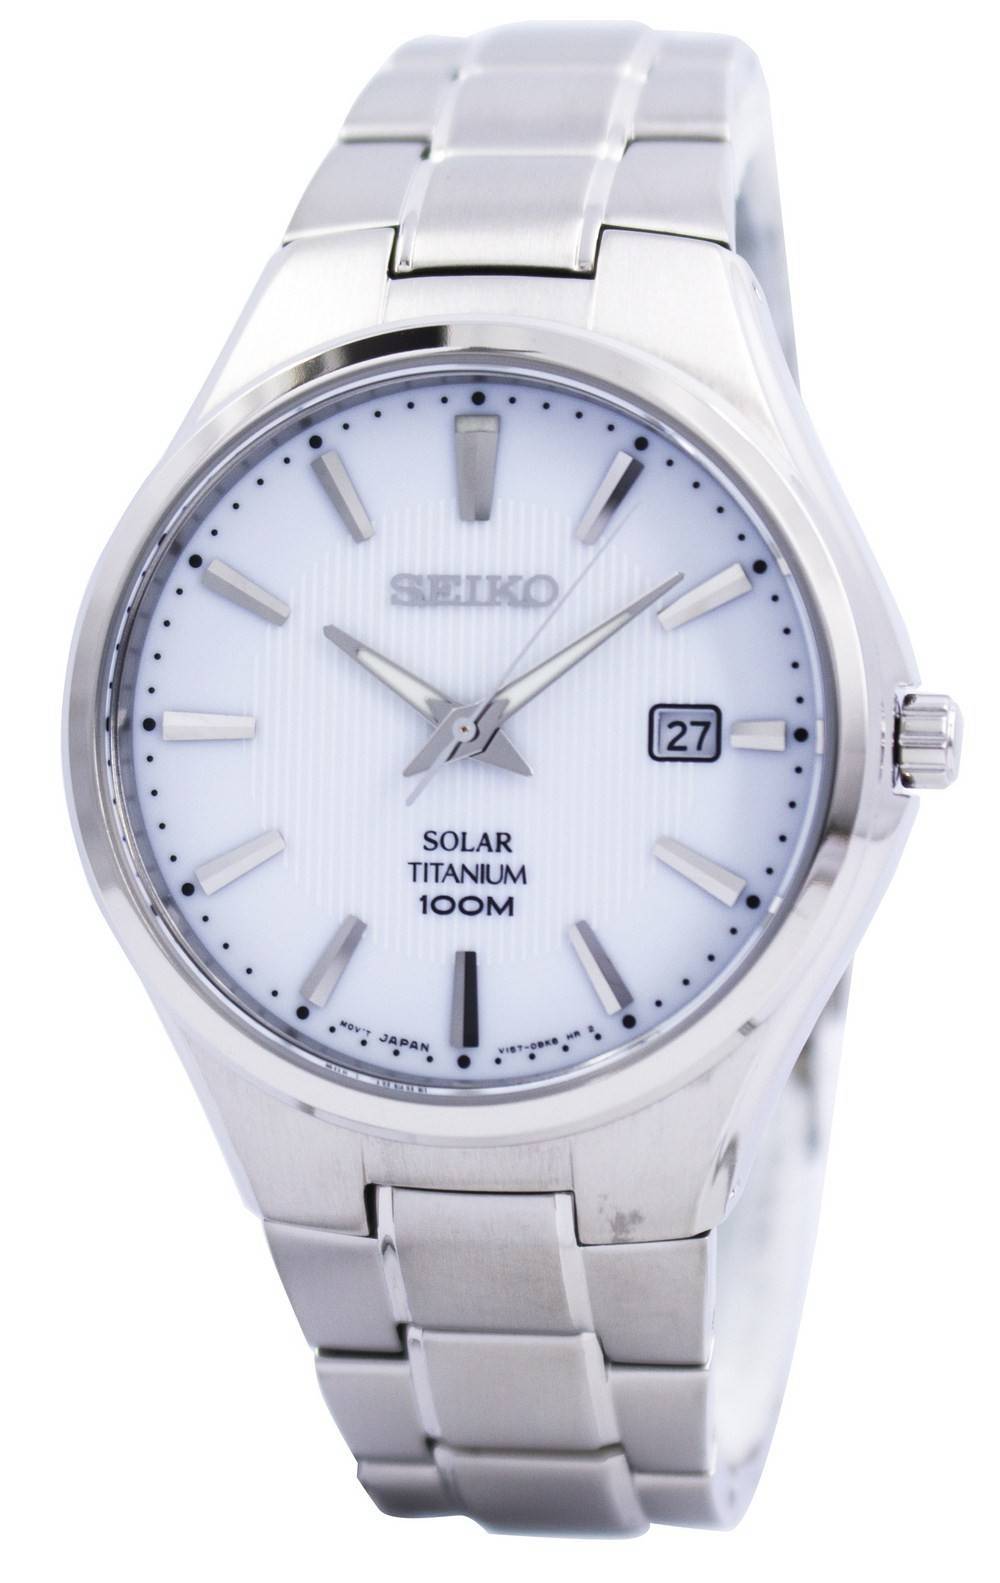 Đồng hồ đeo tay nam Seiko Solar Titanium 100M SNE375 SNE375P1 SNE375P vi